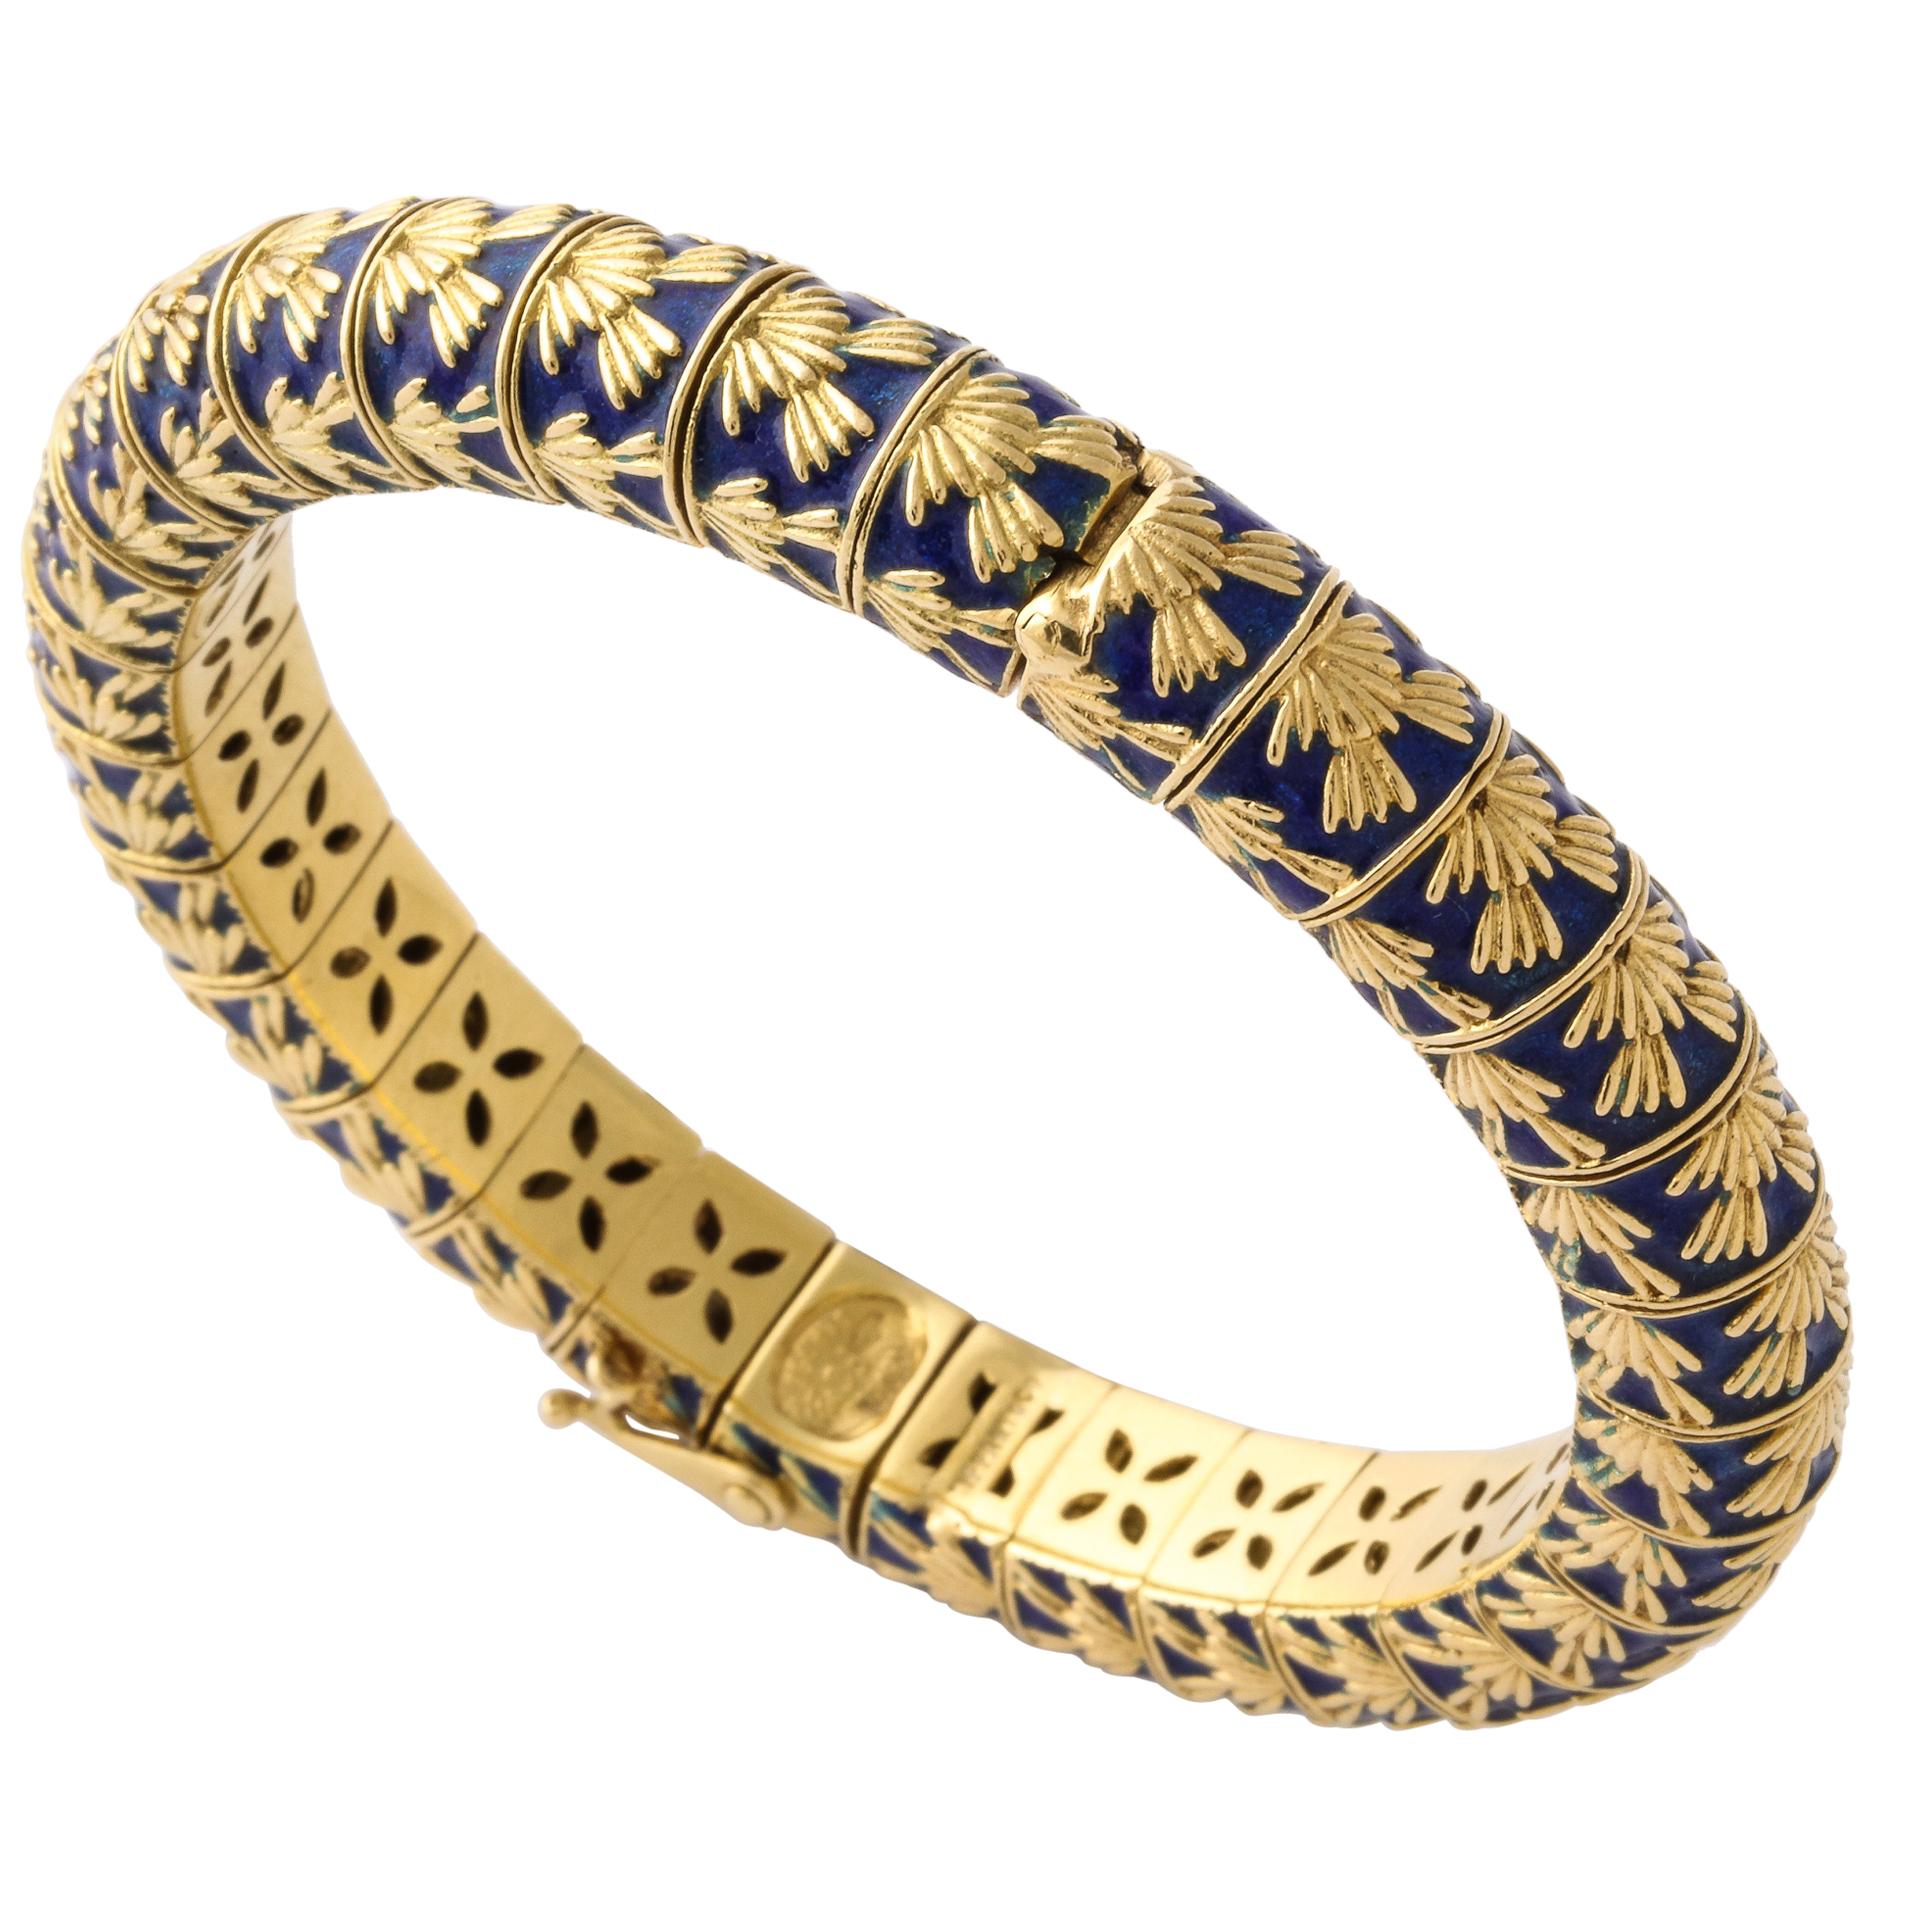 Tiffany & Co. Paris Blue Enamel Gold Bangle Bracelet